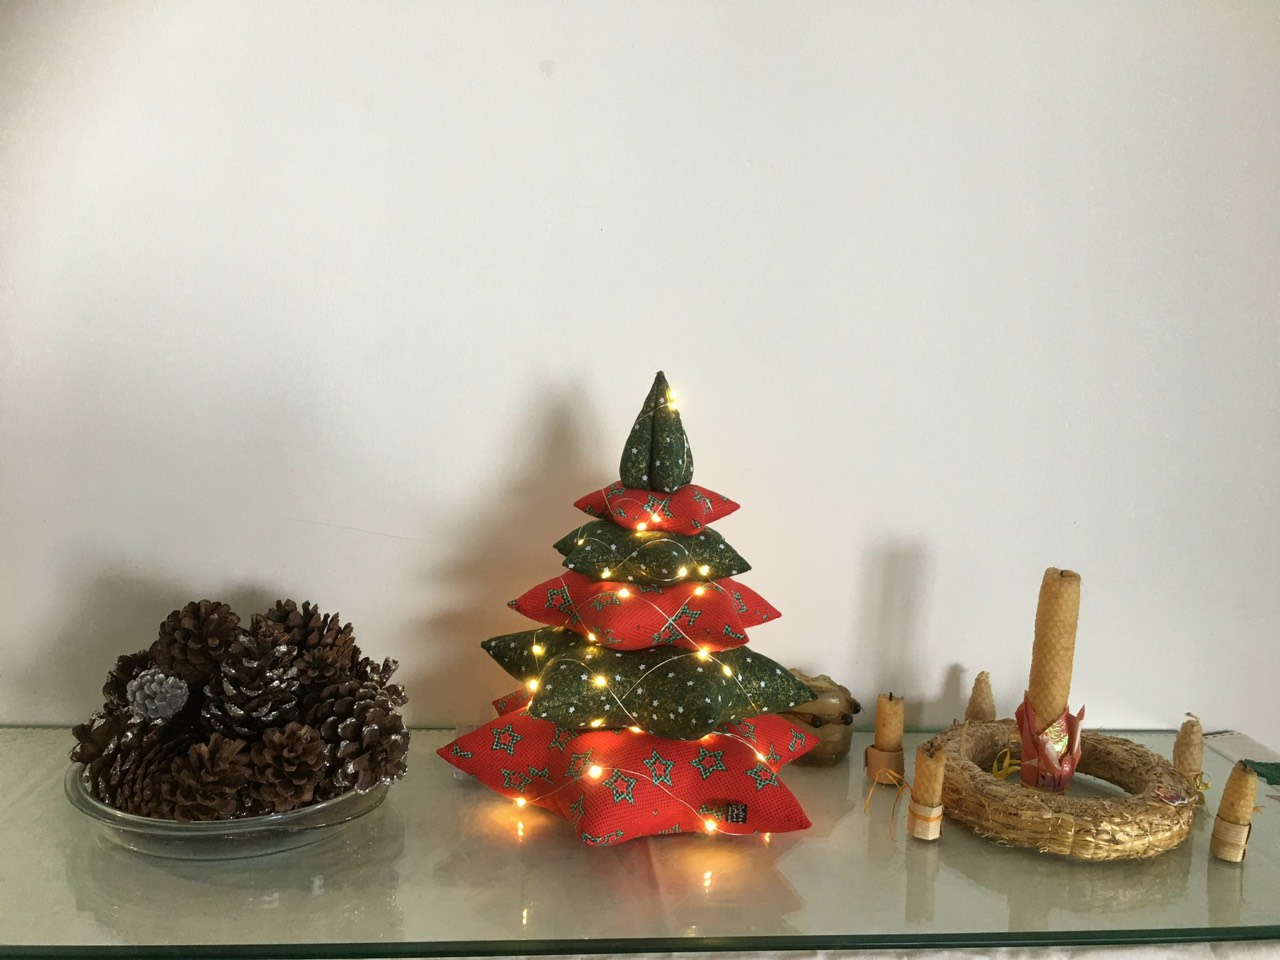 Top 15 christmas decorations star Ideas for a Festive Holiday Season